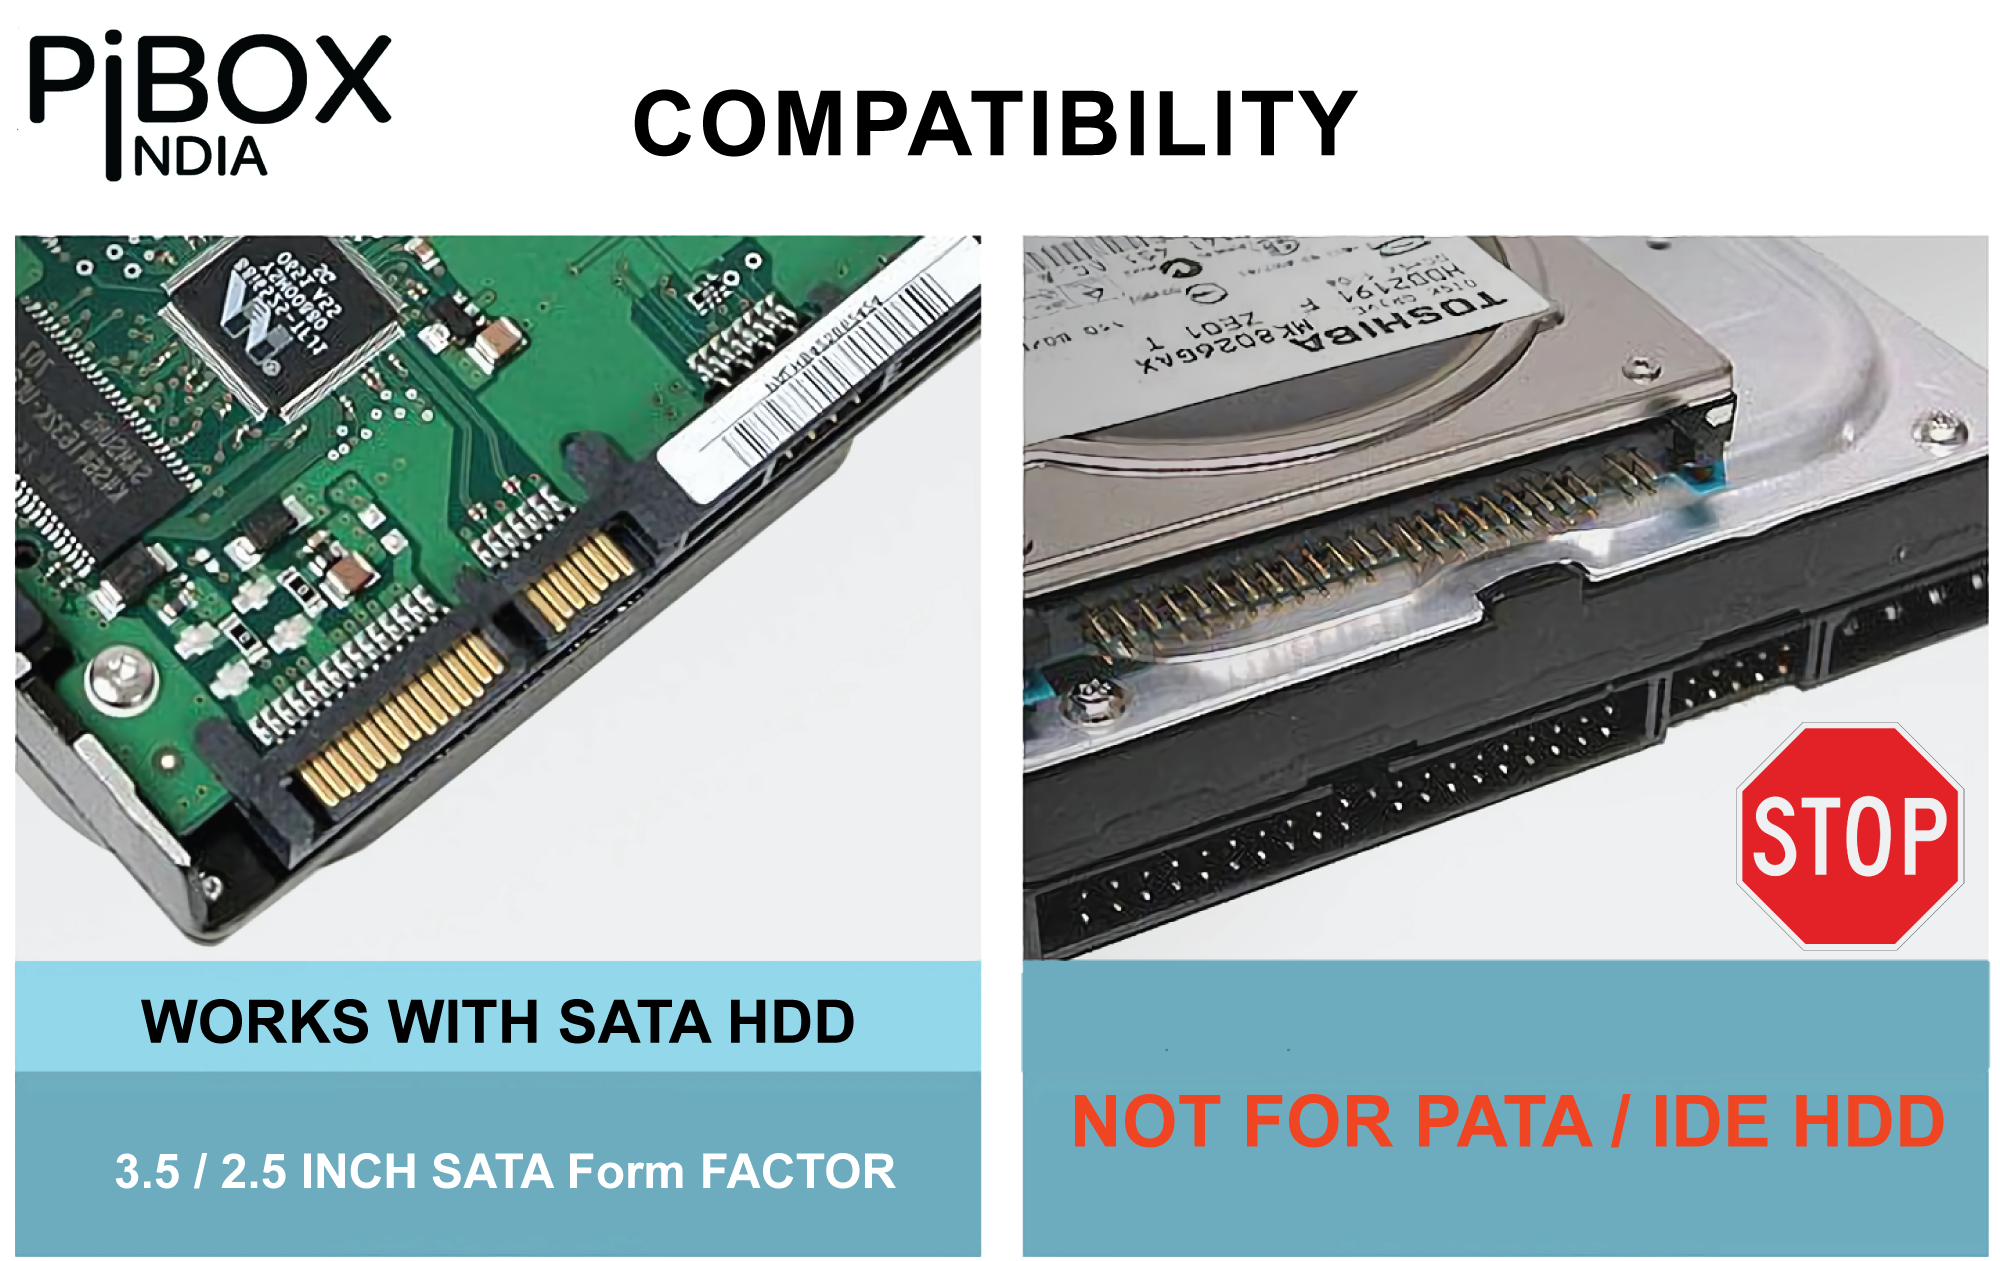 SANOXY USB 3.0 to SATA 2.5 inch USB Hard Disk Drive HDD Adapter  SANOXY-VNDR-USB3-sata-cbl - The Home Depot